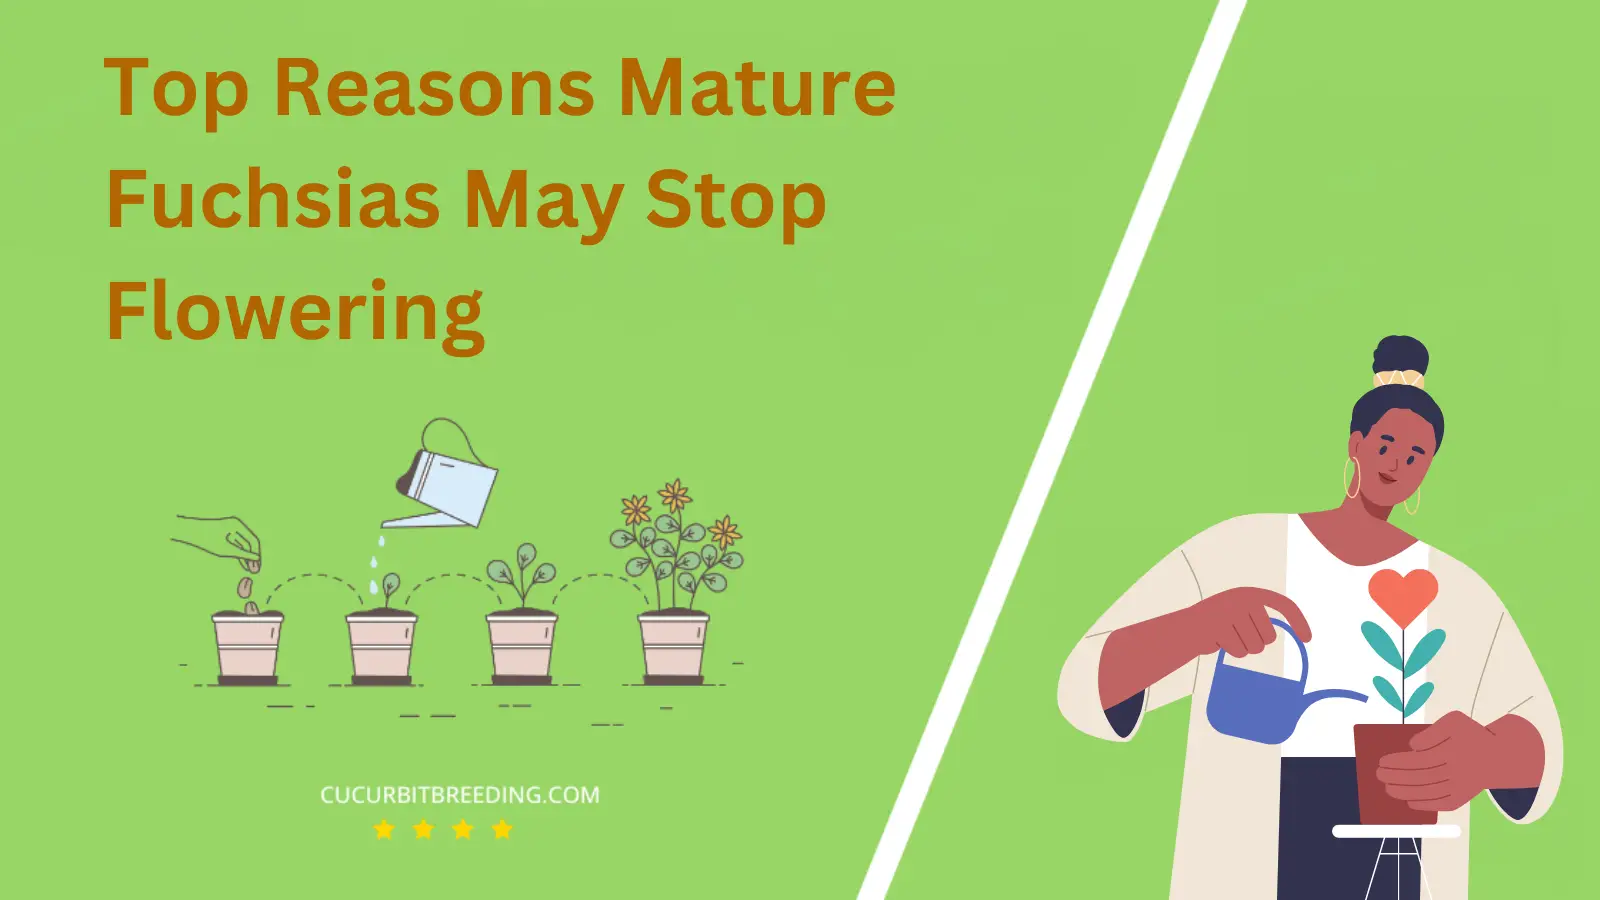 Top Reasons Mature Fuchsias May Stop Flowering